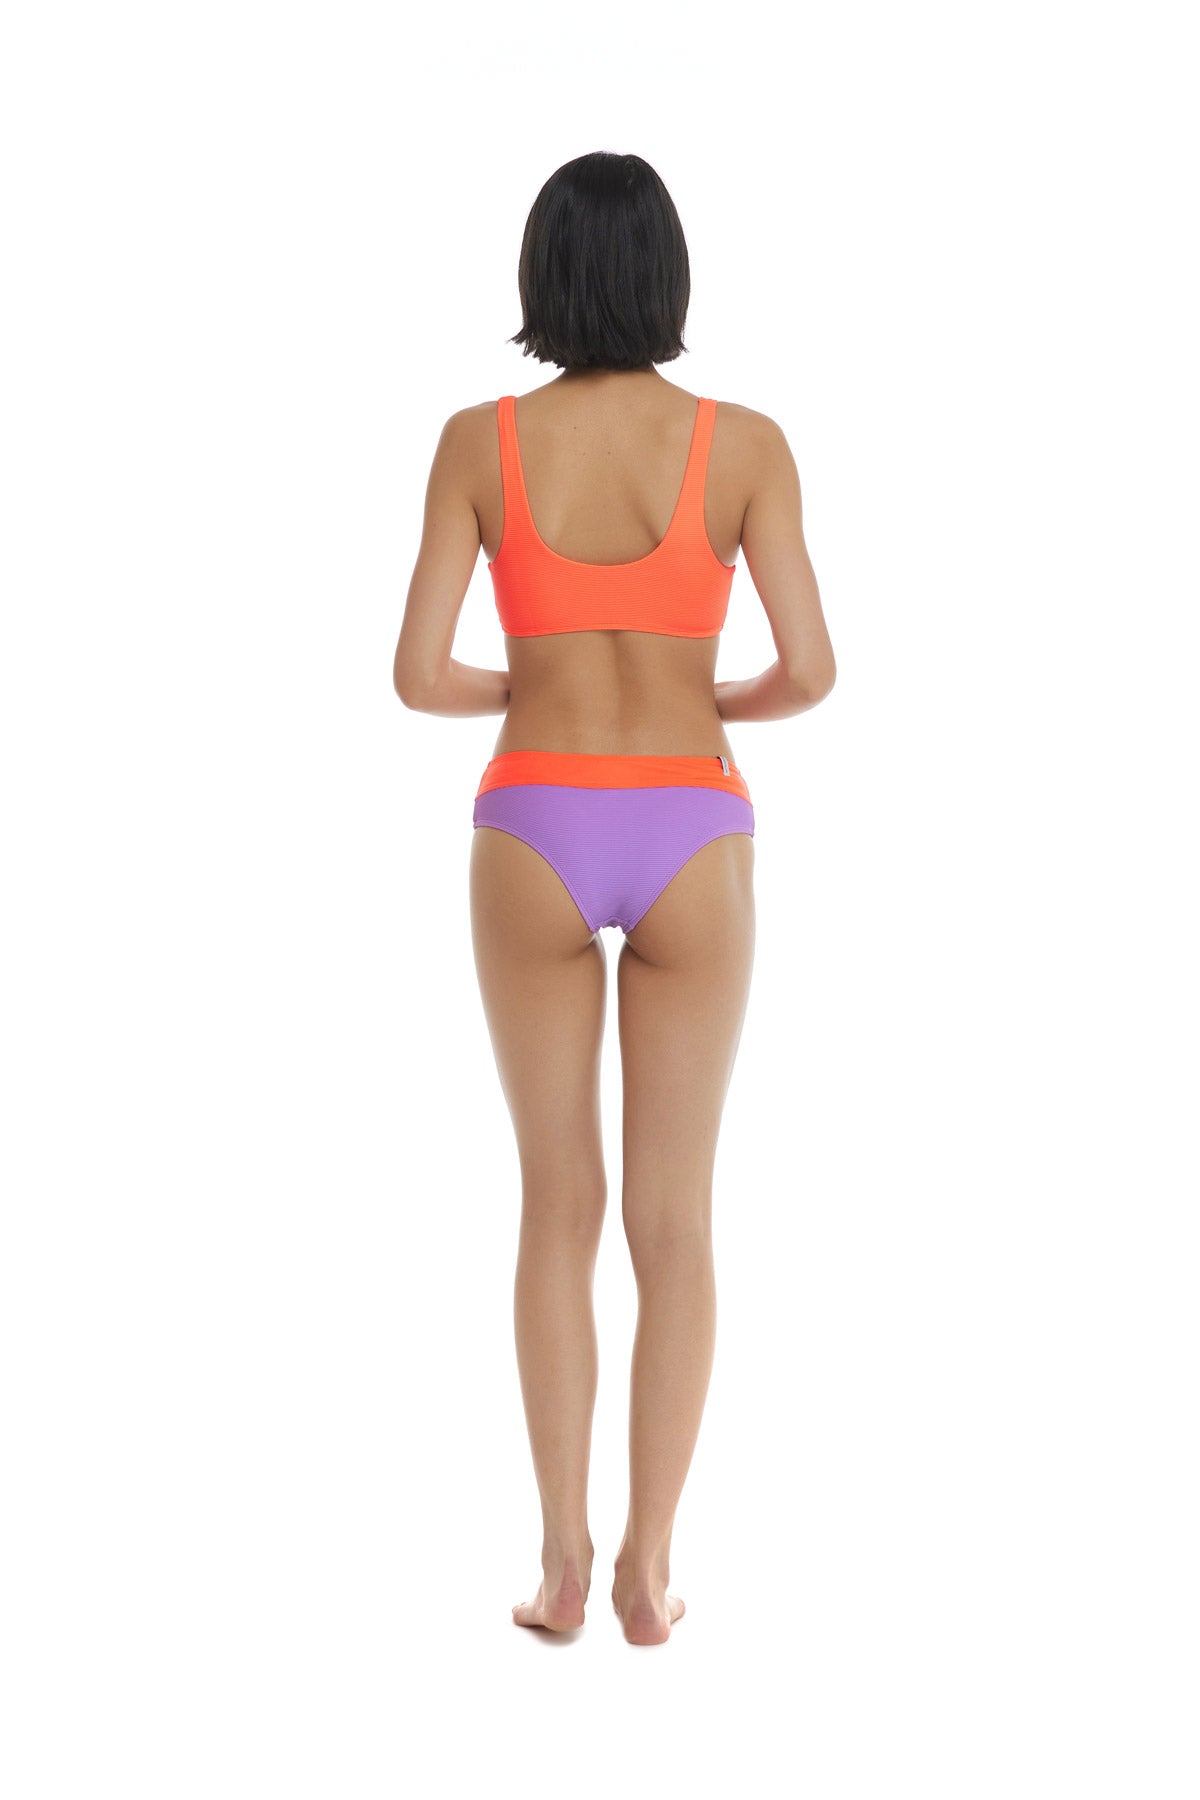 Body Glove: Spectrum Kate Scoop Bikinii Top - SPARK611